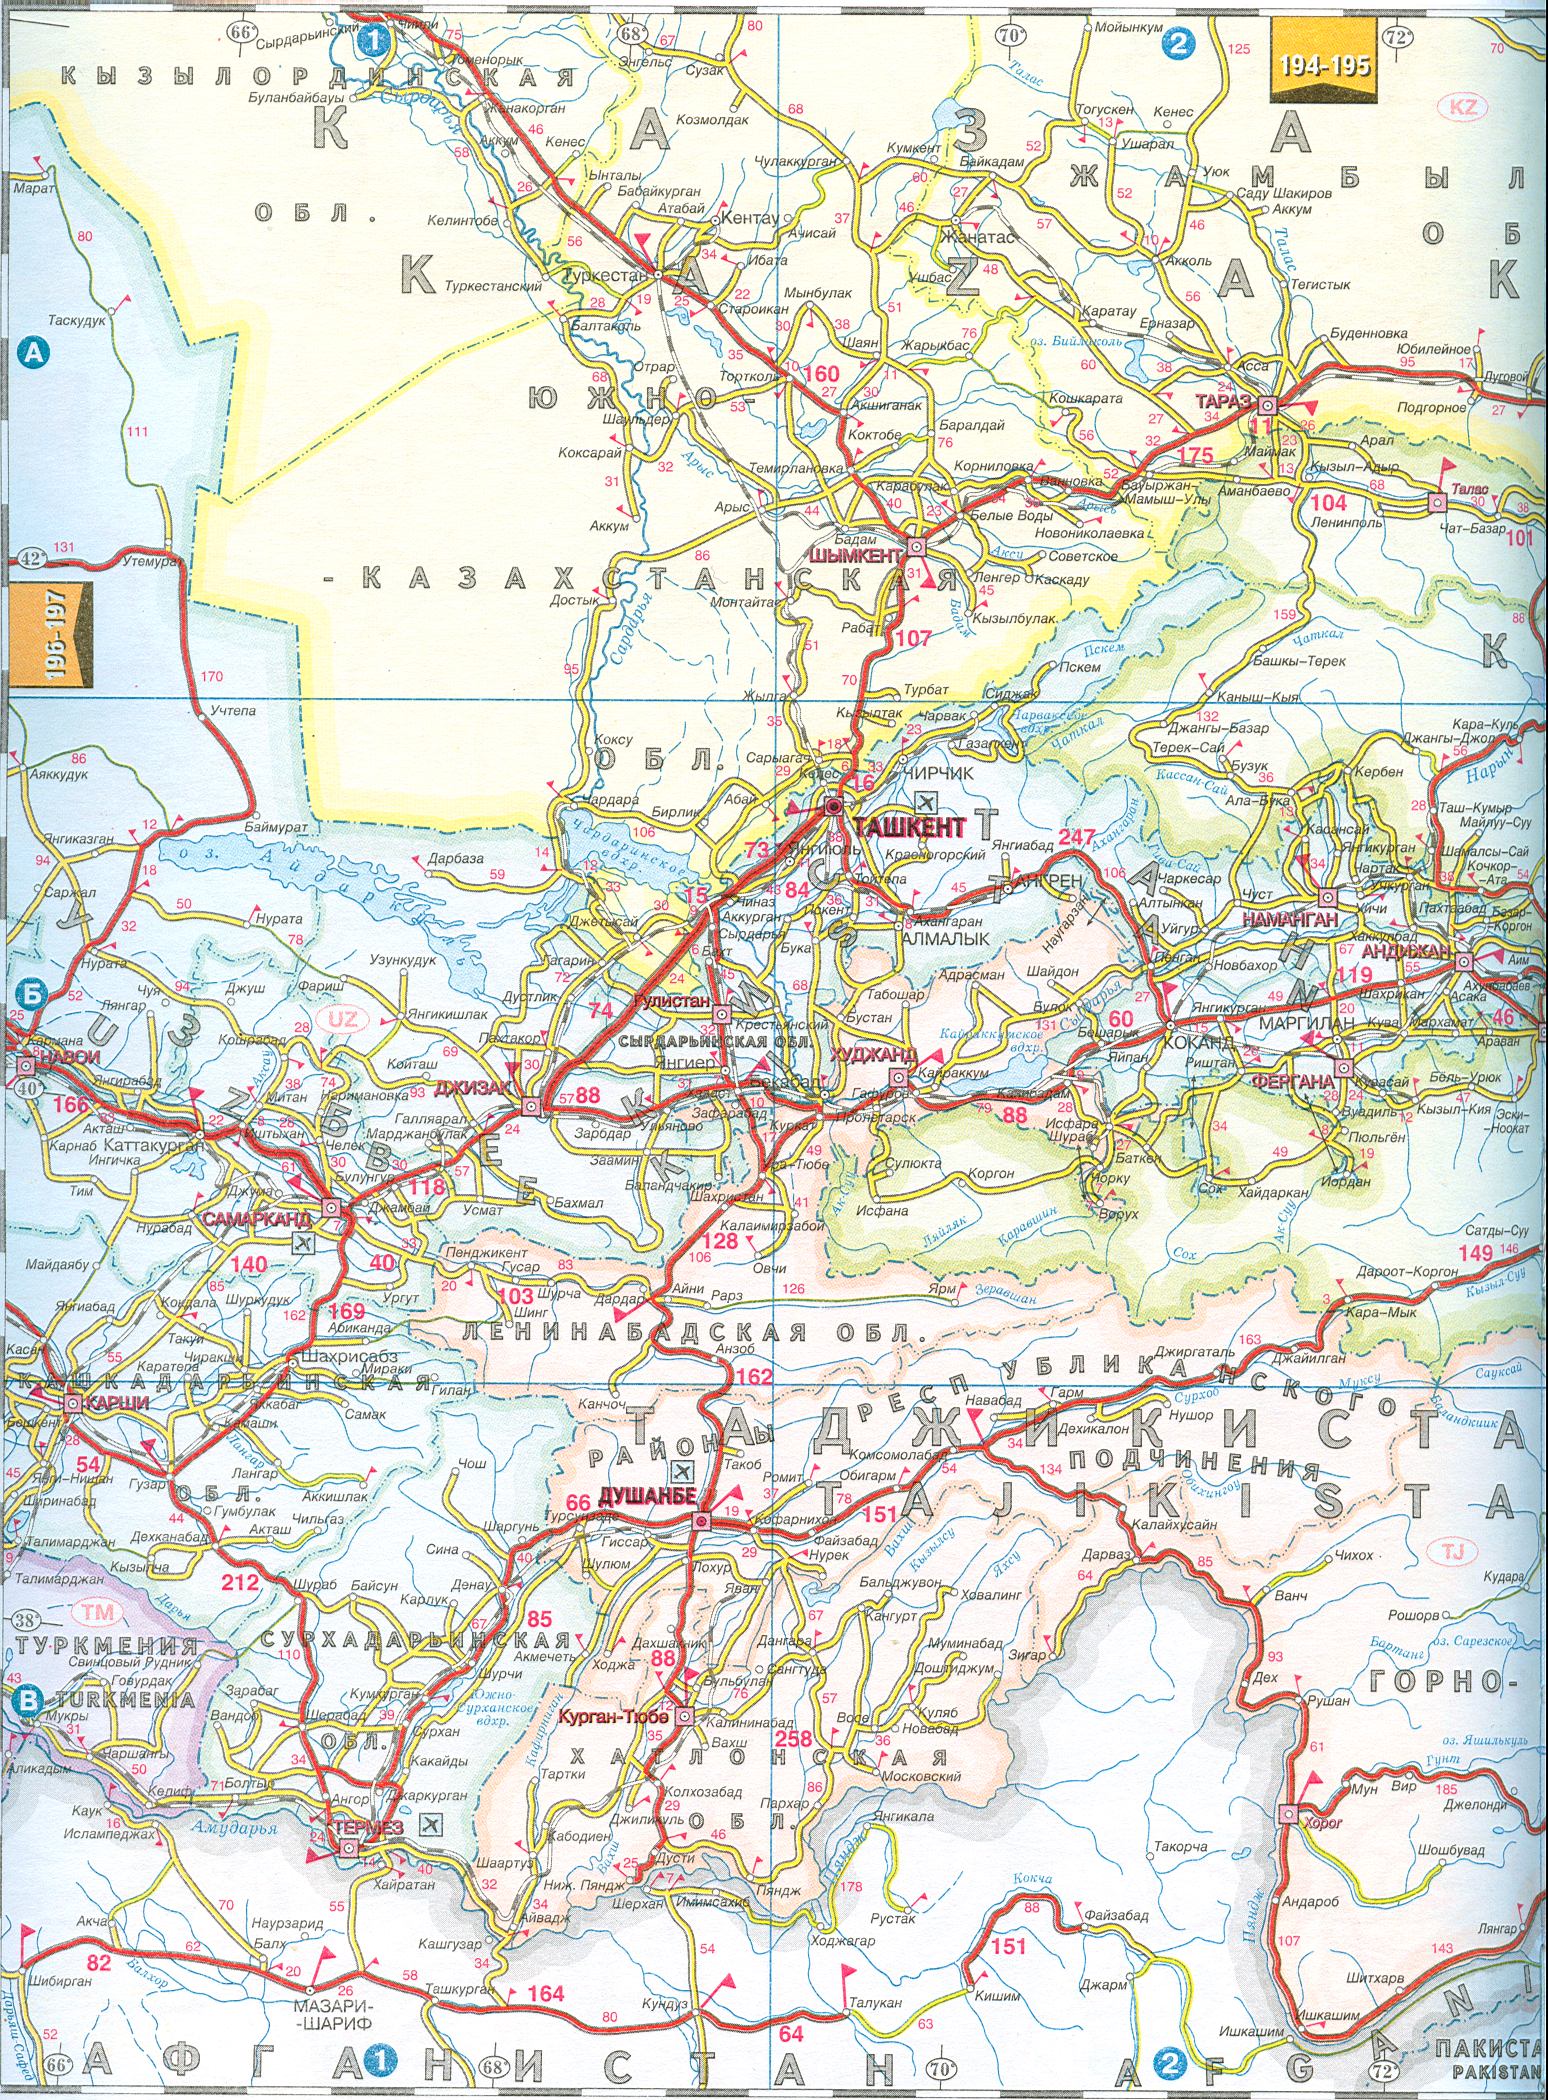 Карта Киргизии и Таджикистана из атласа автодорог СНГ. Карта Киргизии и Таджикистана масштаба 1см:35км, A0 - 